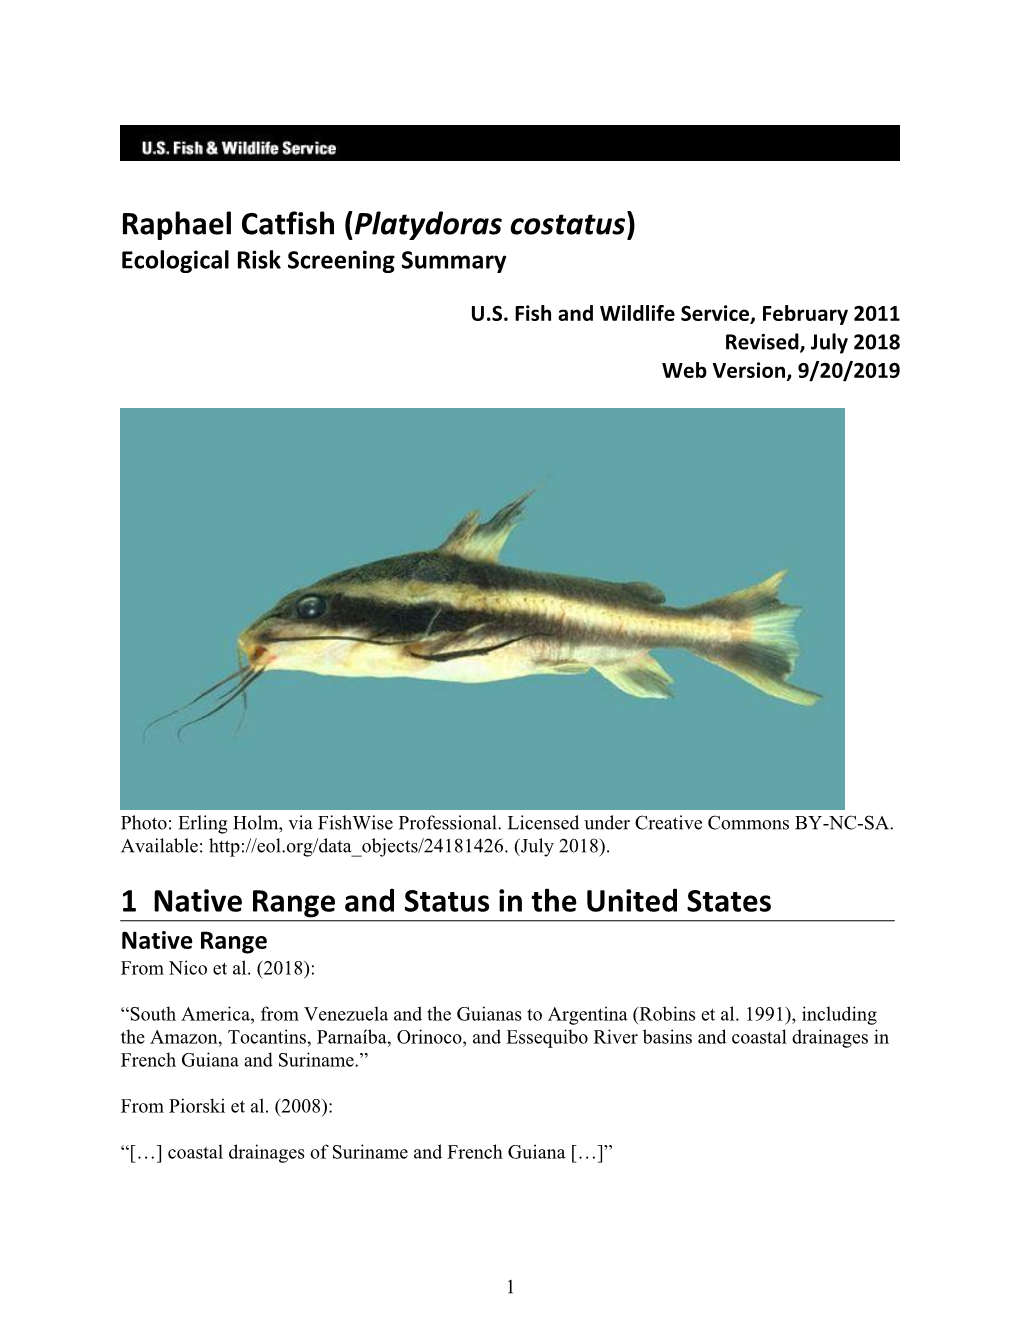 Platydoras Costatus (Raphael Catfish) Ecological Risk Screening Summary